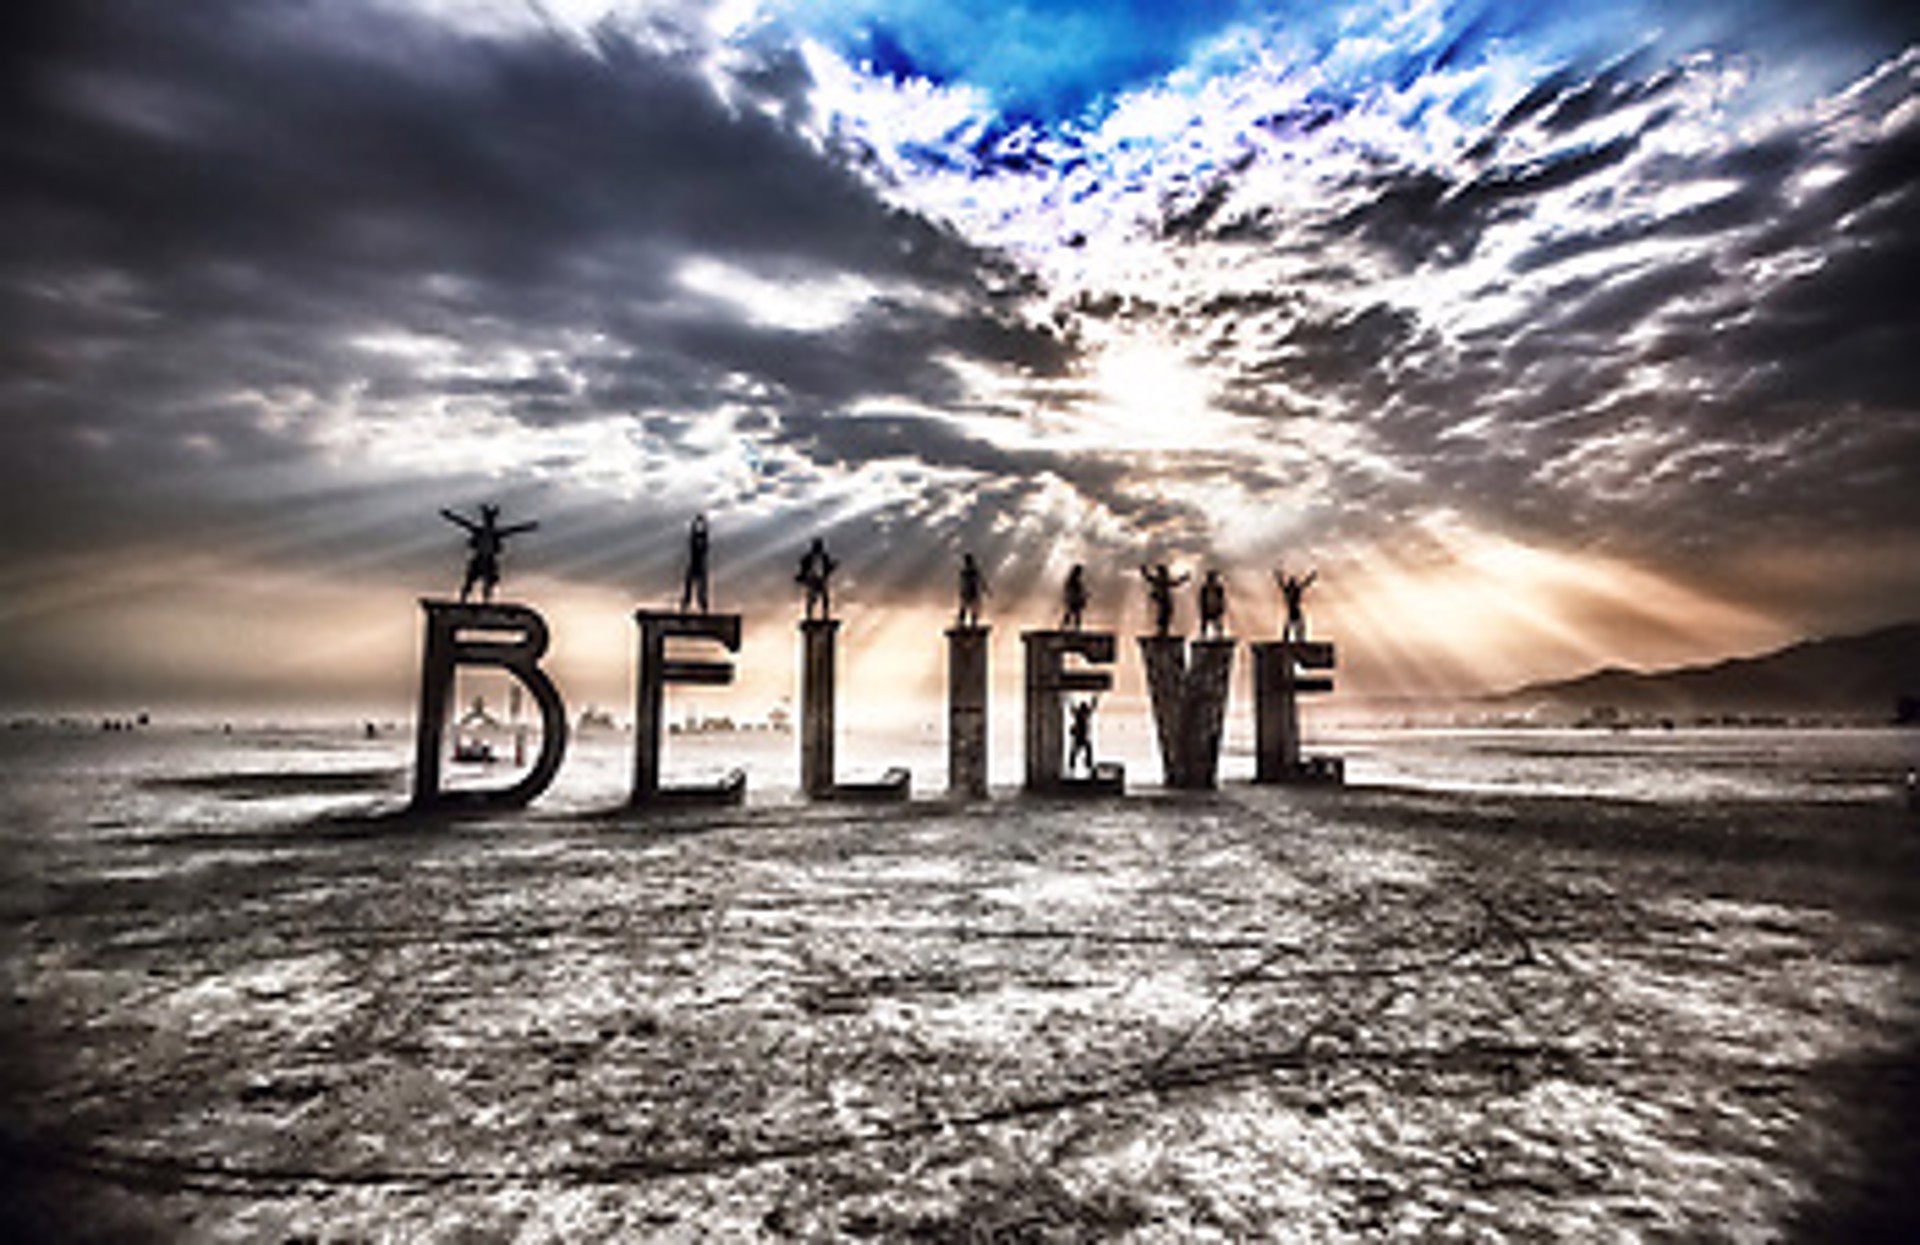 Believe by Peter Ruprecht